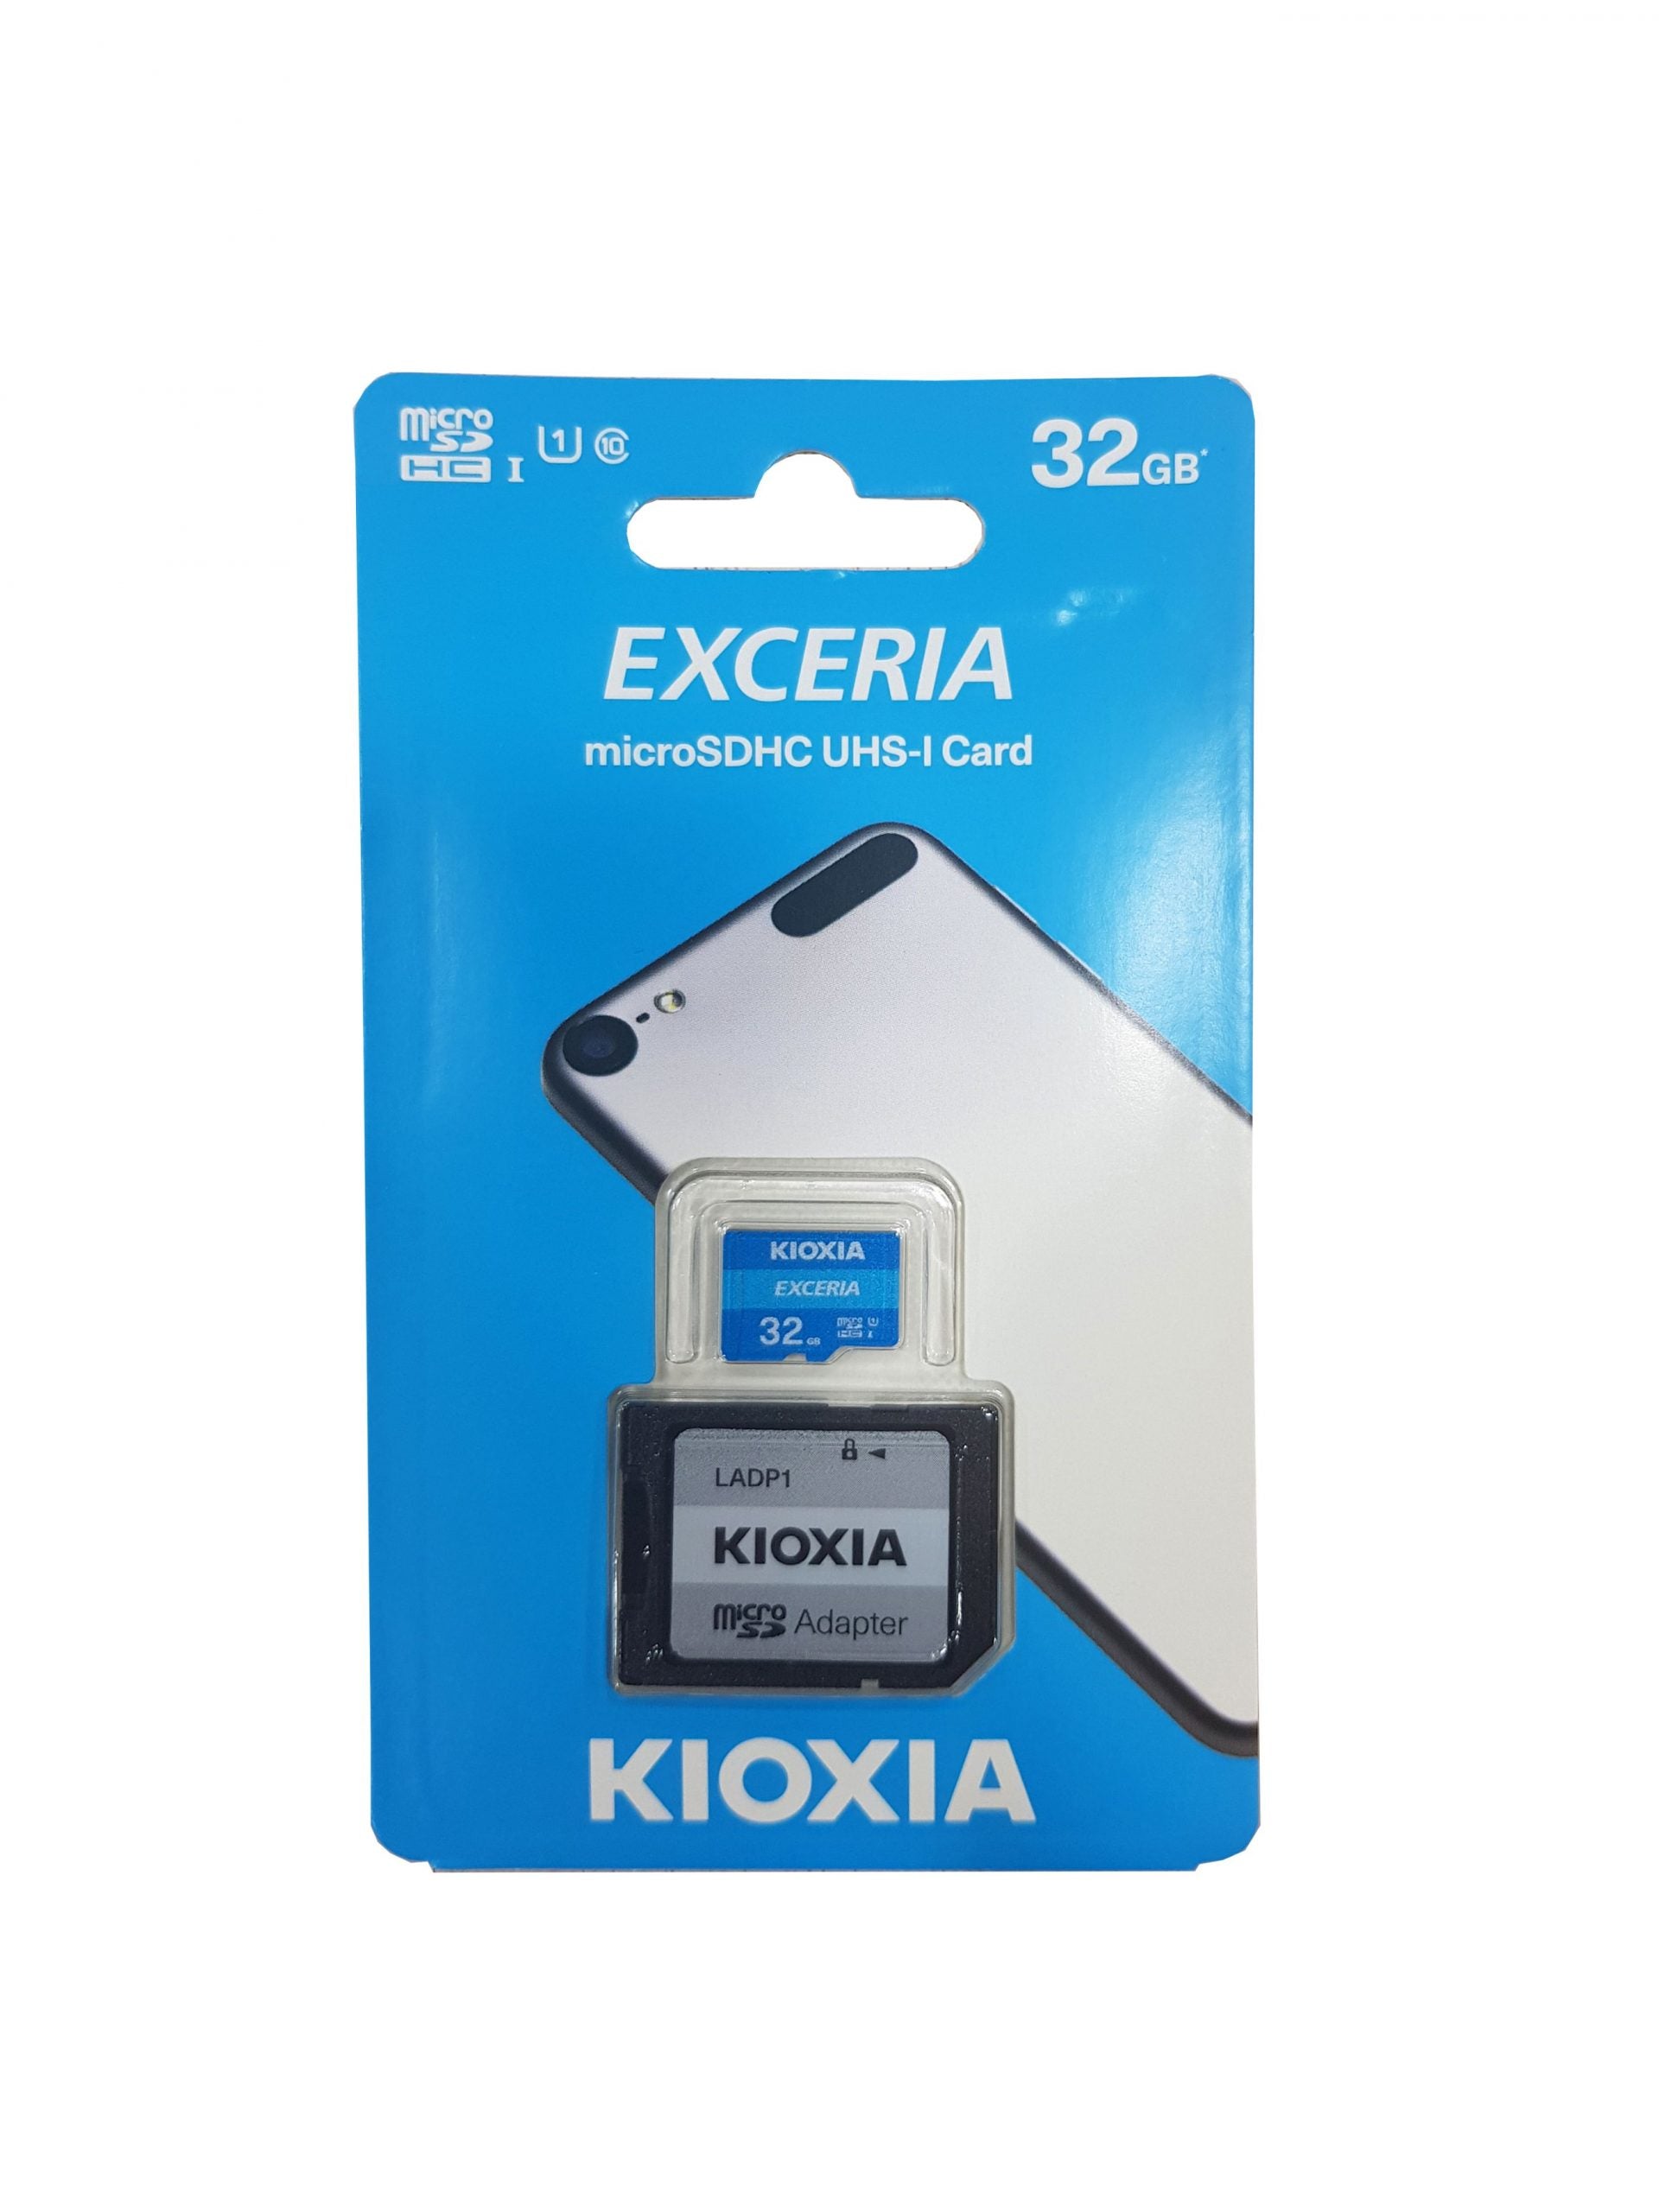 KIOXIA Exceria MicroSDHC UHS-1 Card 32GB